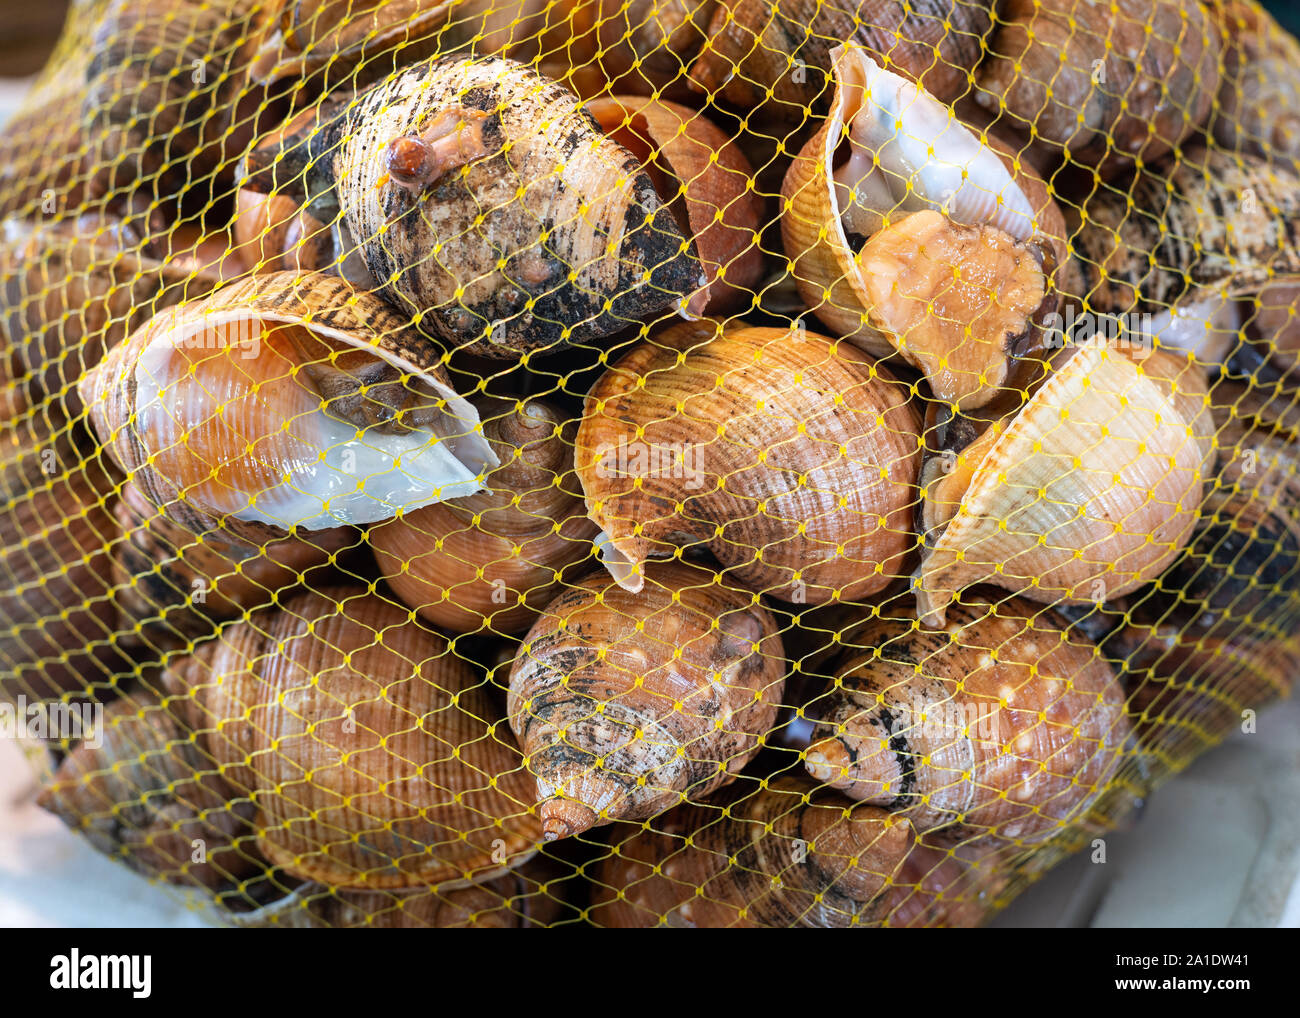 Bolsa de malla de caracoles vivos en mercado de pescado Foto de stock